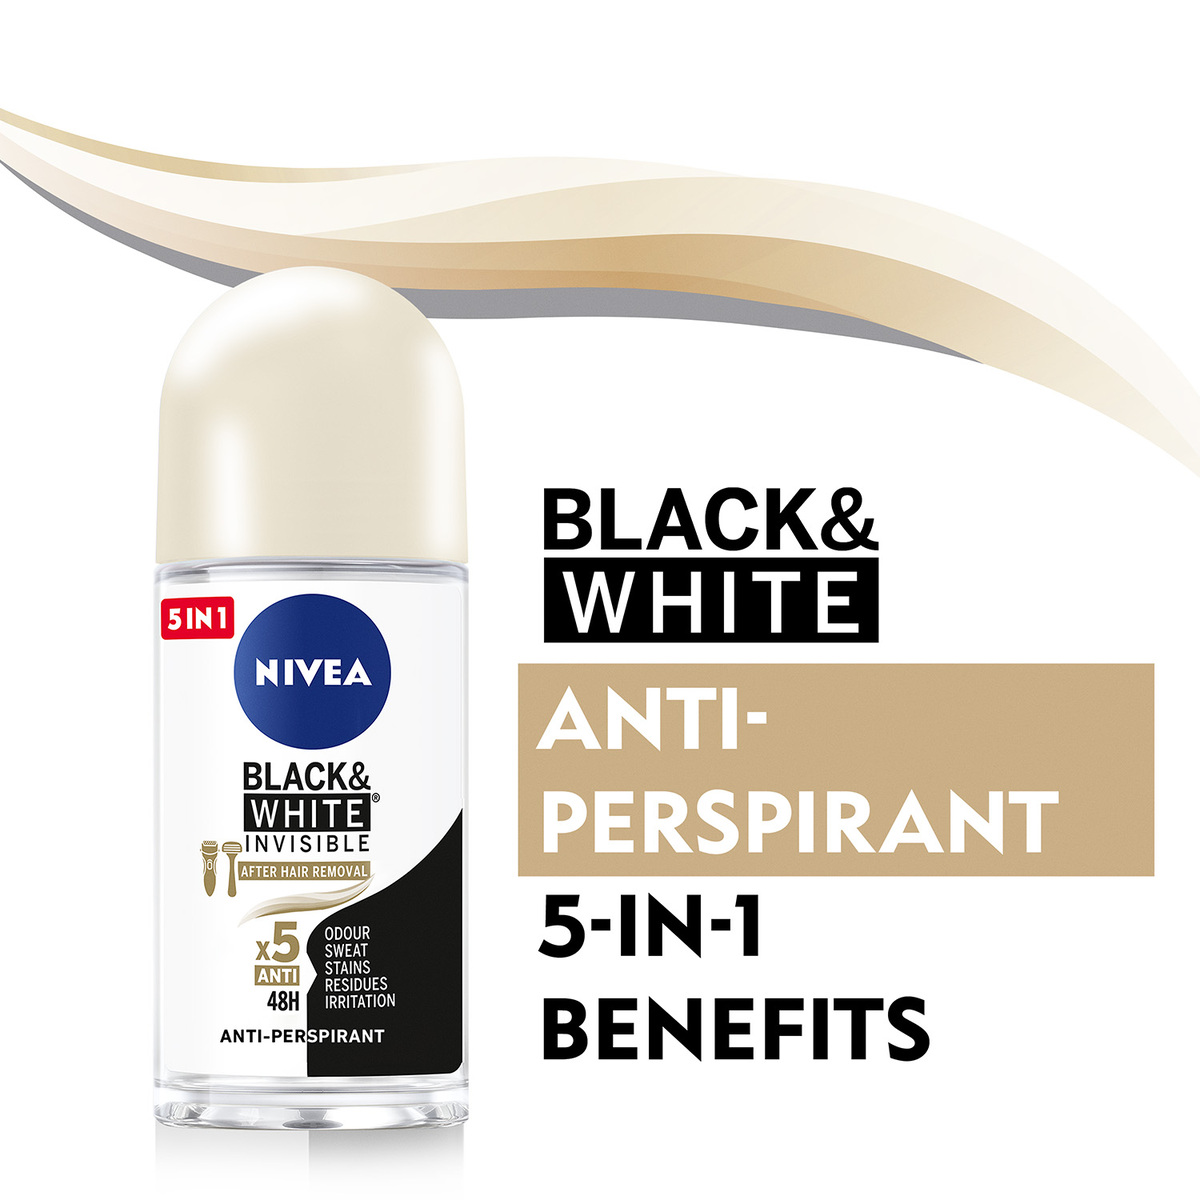 Nivea Deodorant Roll-on Black & White Silky Smooth 50 ml